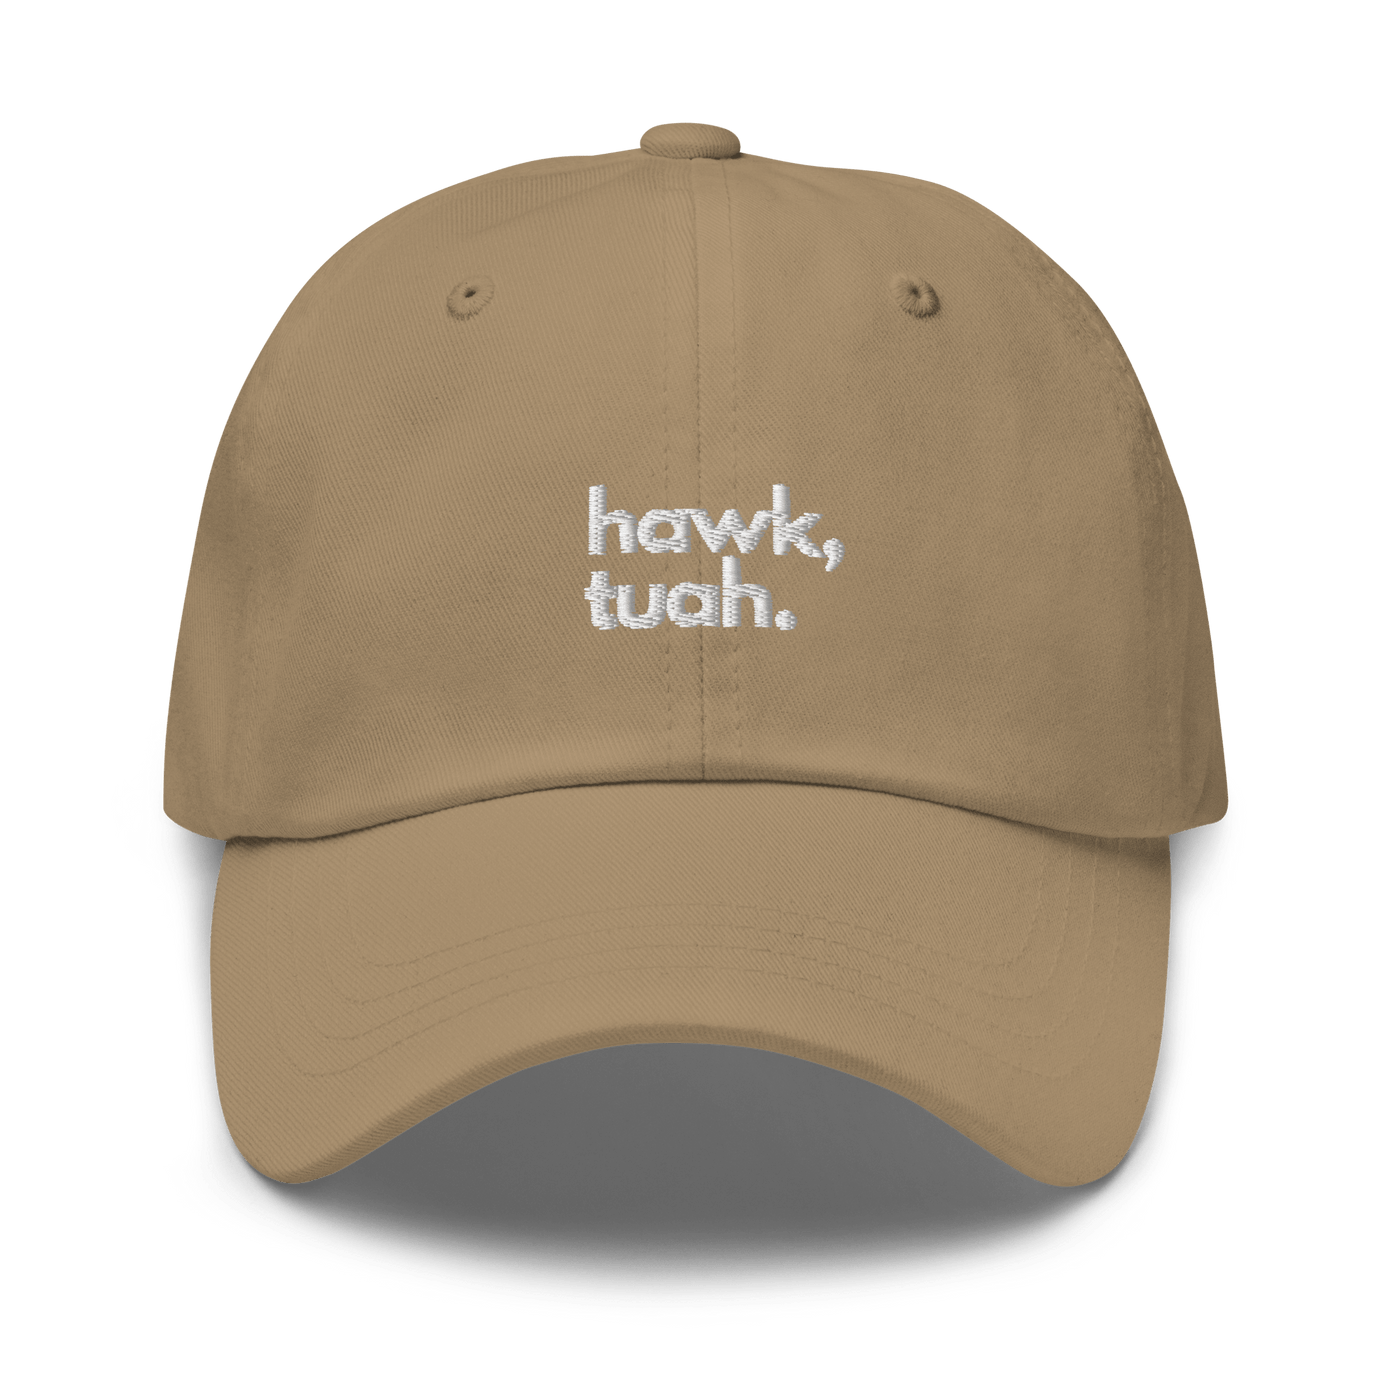 Hawk Tuah Dad hat - Khaki - Just Another Cap Store